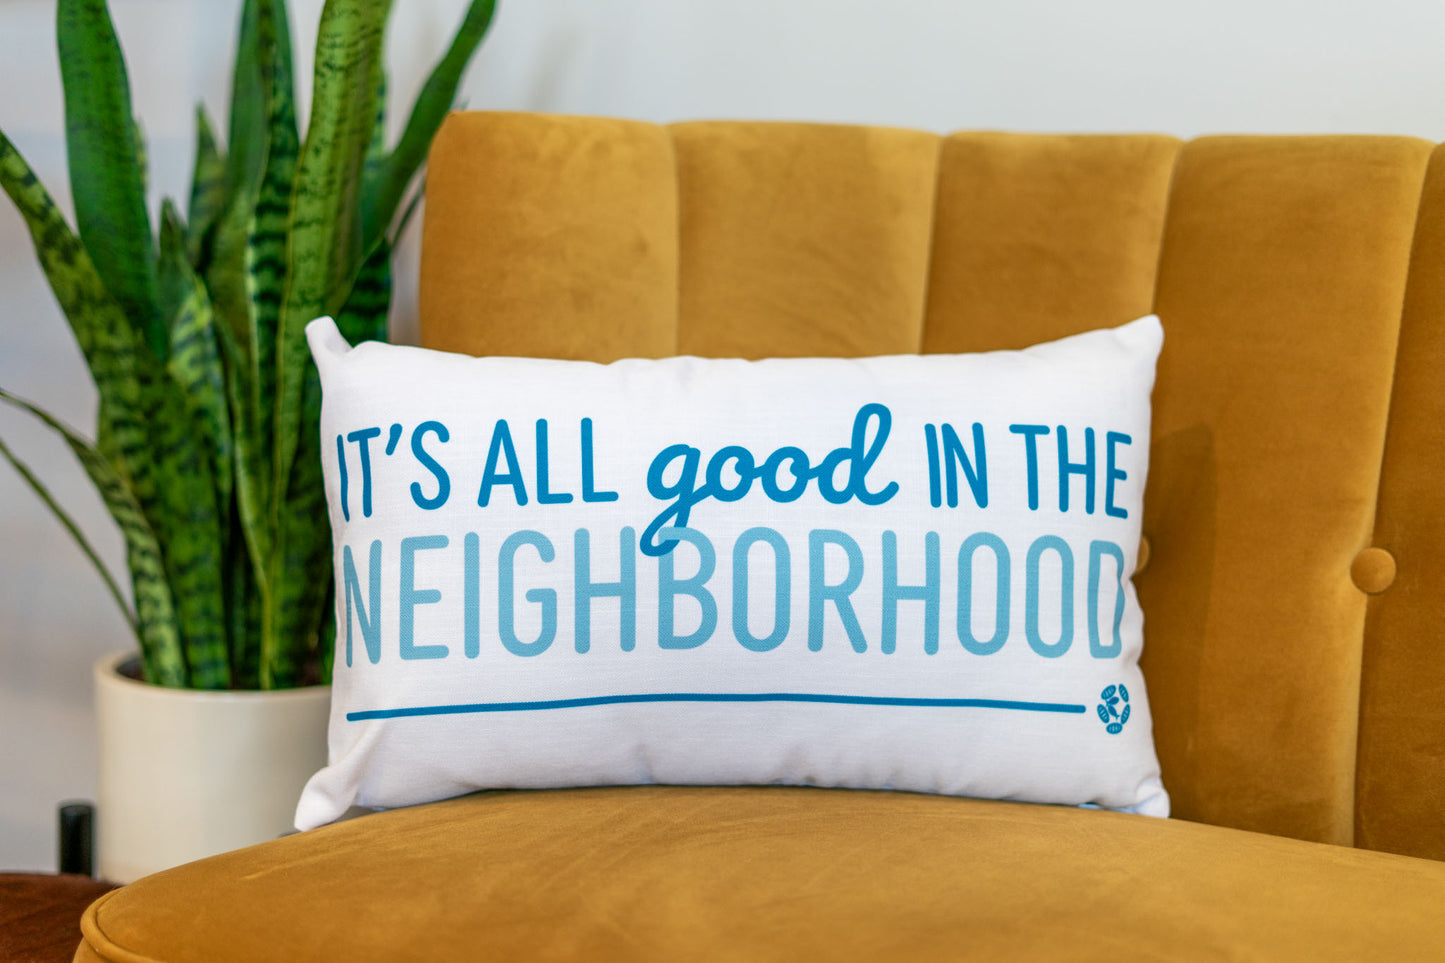 The Neighborhood Pillow